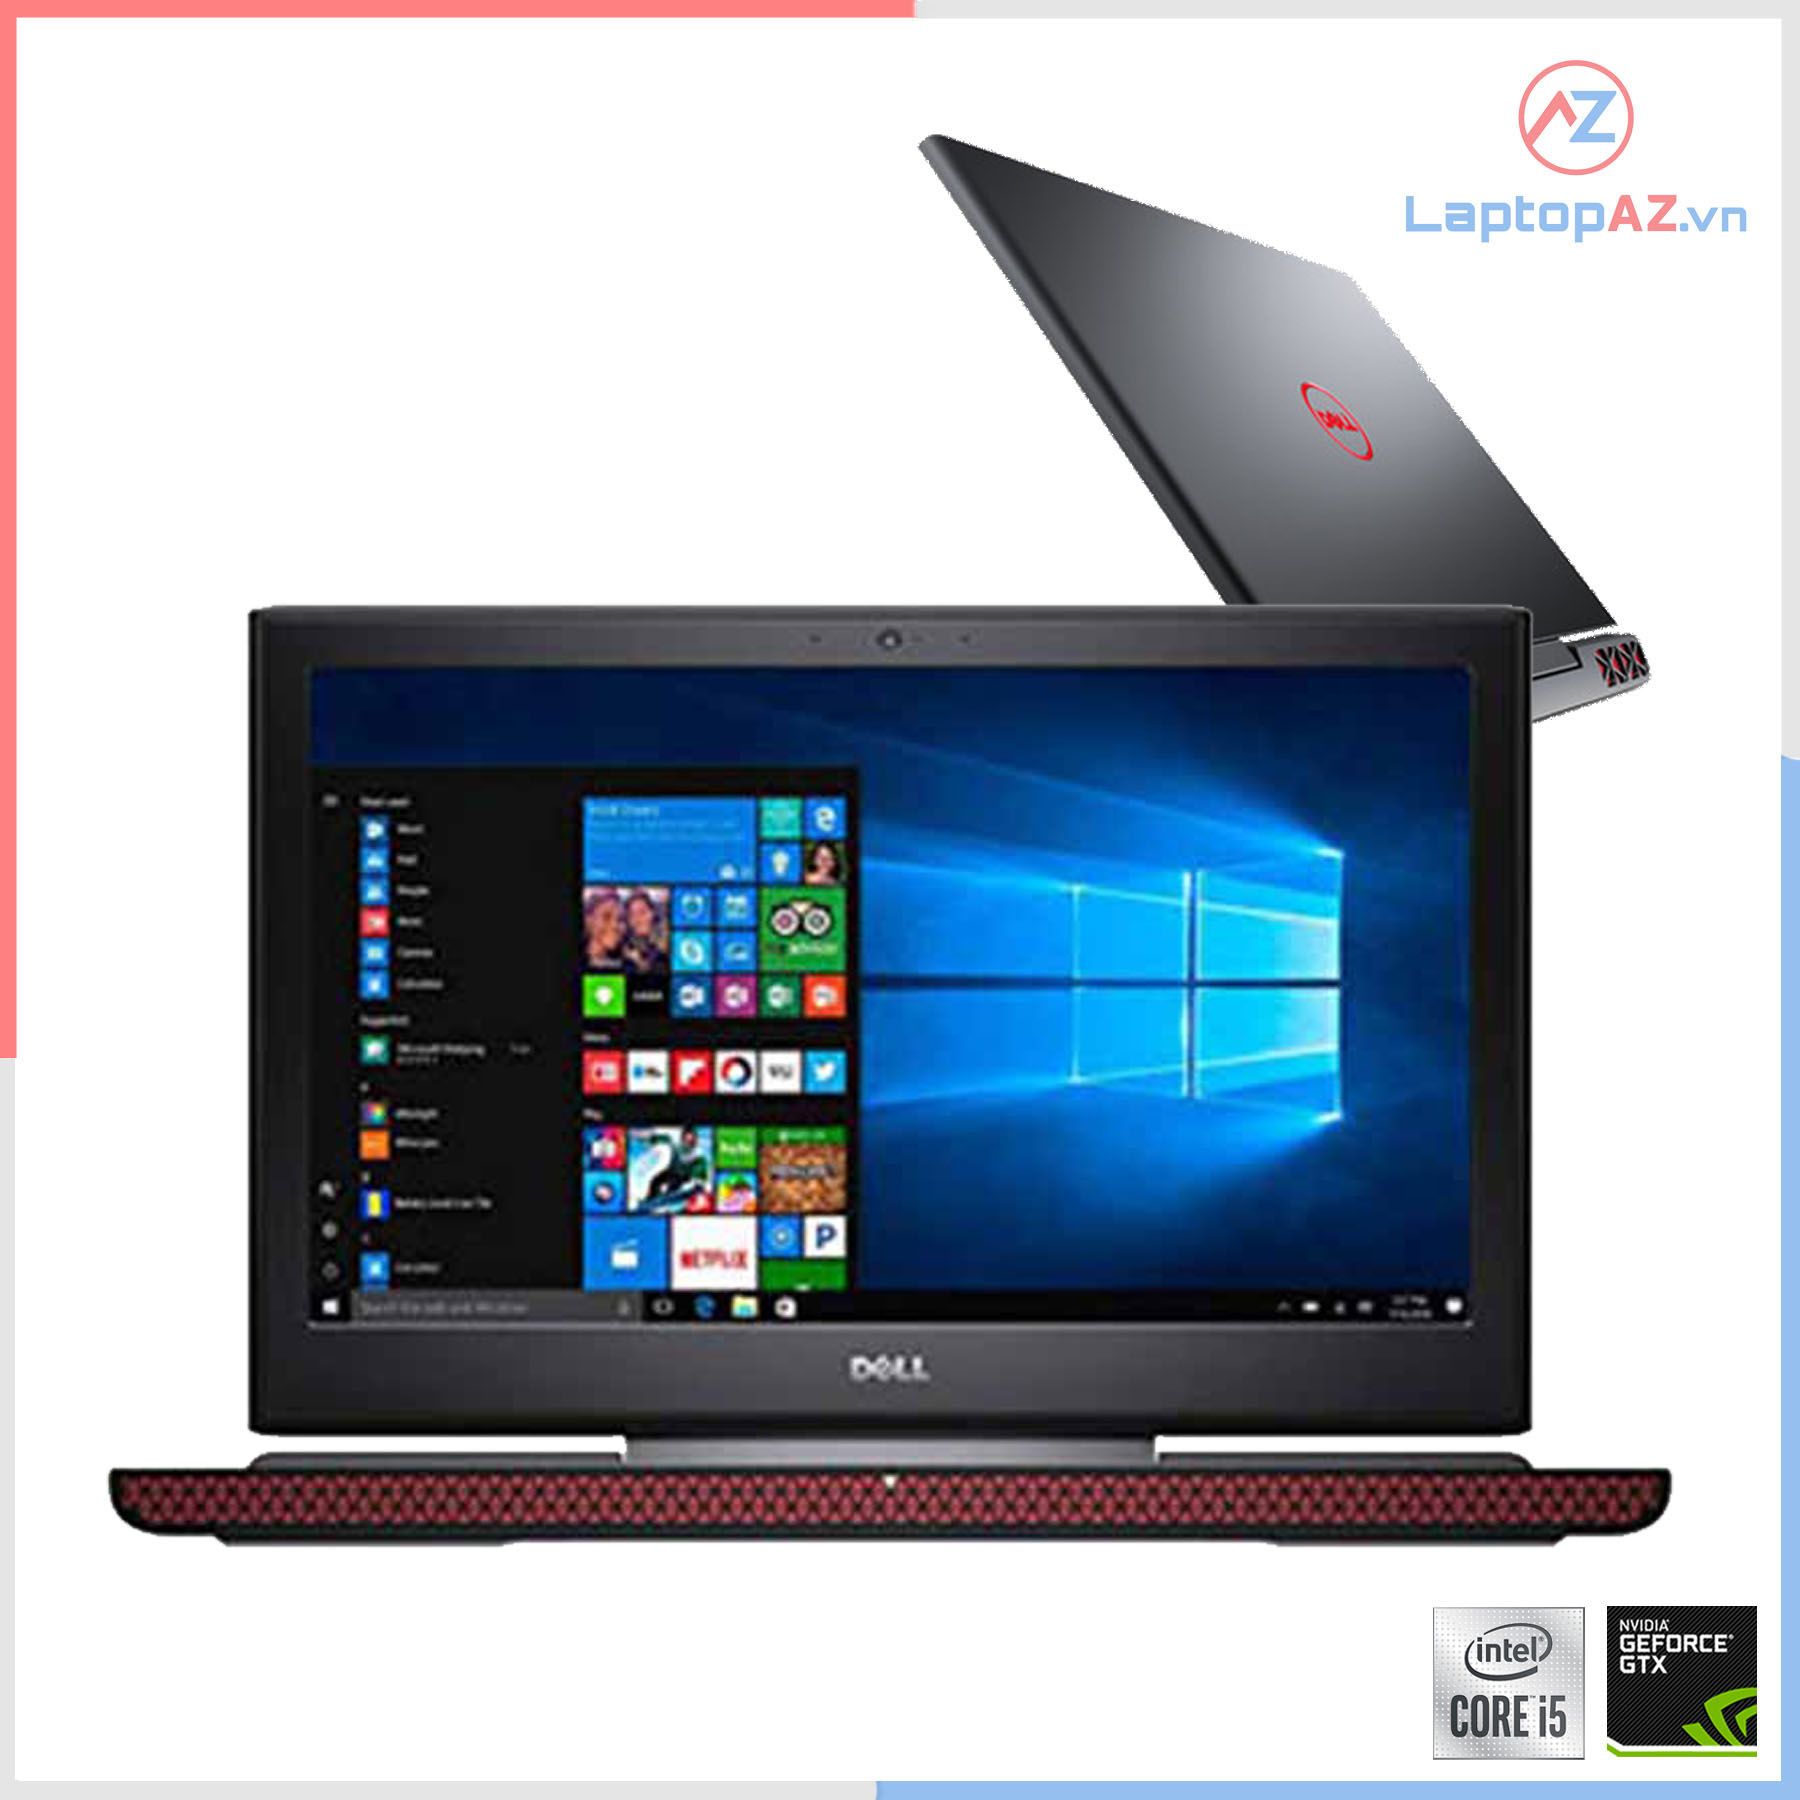 Laptop Dell Inspiron 7467 (Core i5-7300HQ, 8GB, 128GB + 1TB, VGA 4GB NVIDIA GTX 1050, 14.0 inch FHD